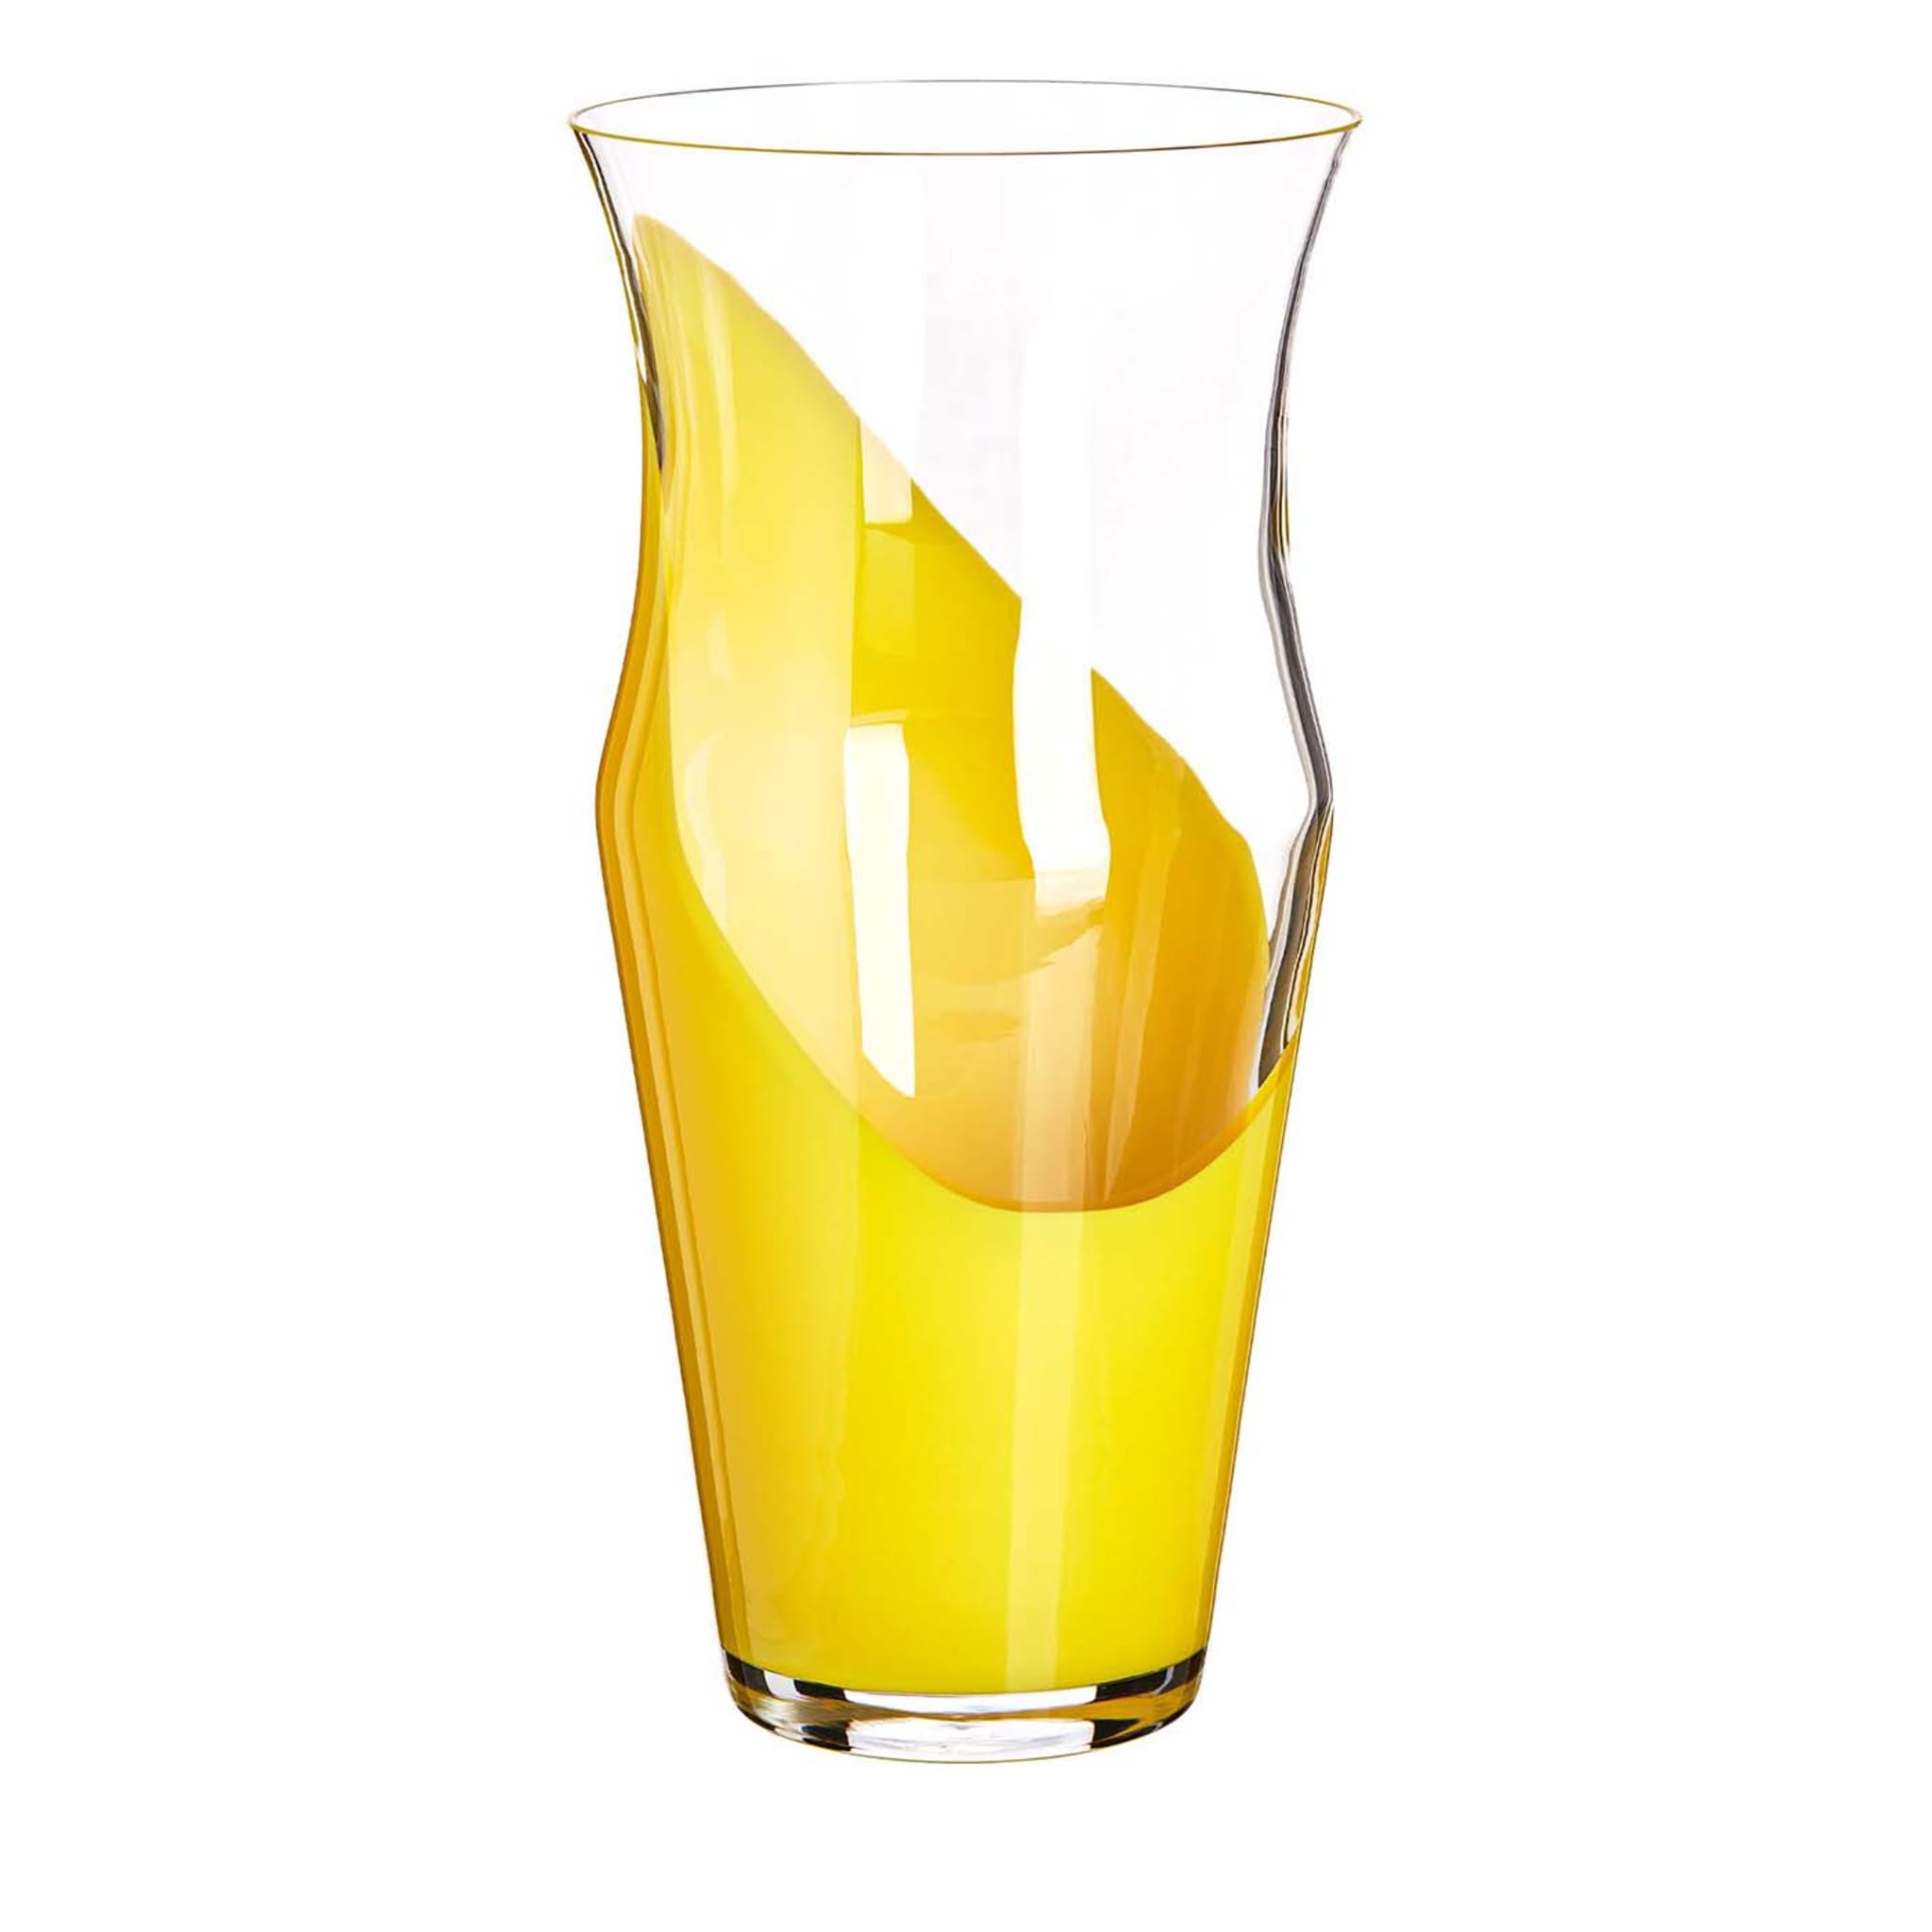 Vase Monocromo jaune et transparent de Carlo Moretti - Vue principale